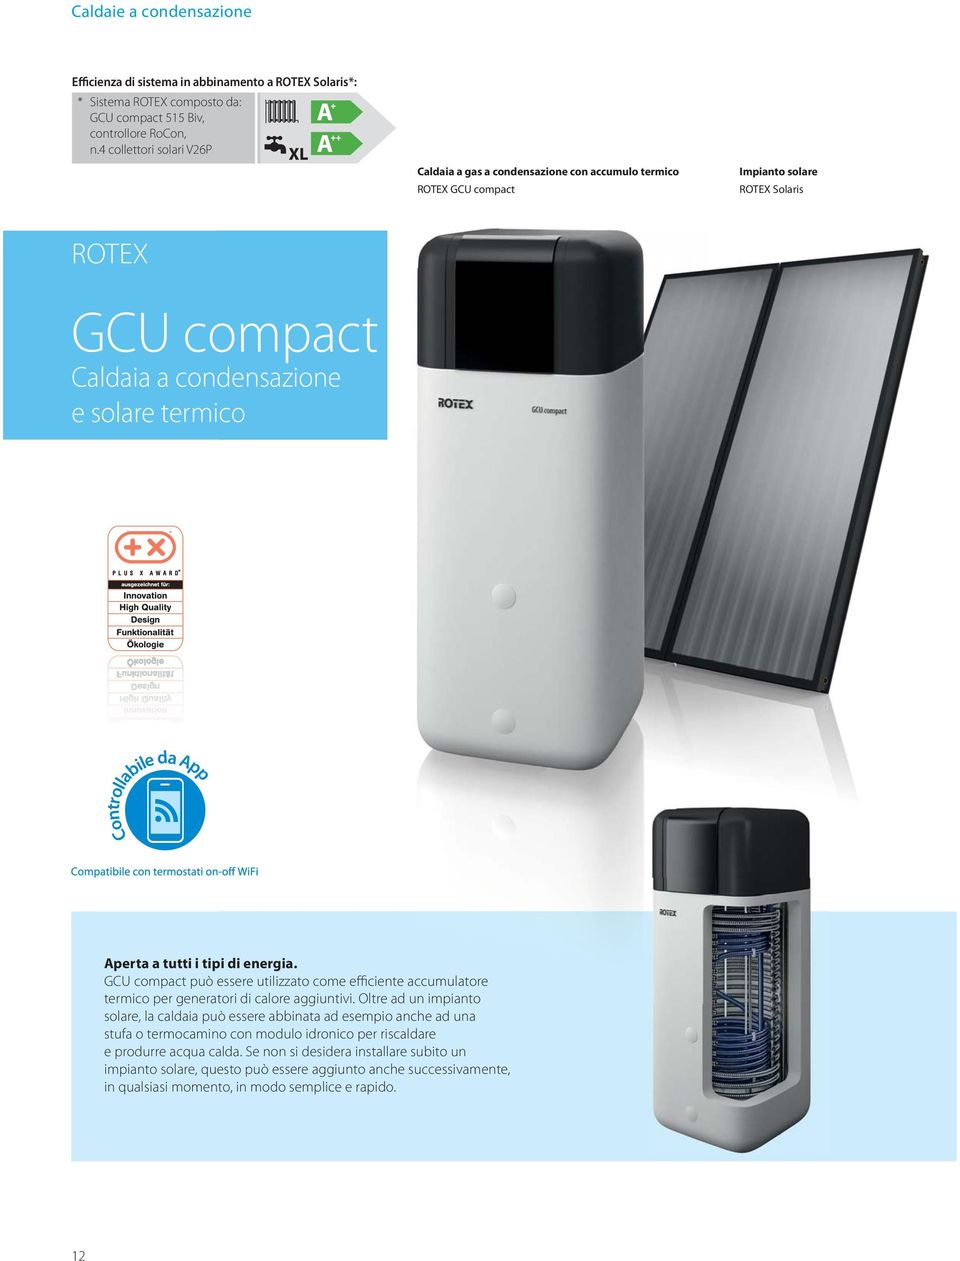 da App Aperta a tutti i tipi di energia. GCU compact può essere utilizzato come efficiente accumulatore termico per generatori di calore aggiuntivi.